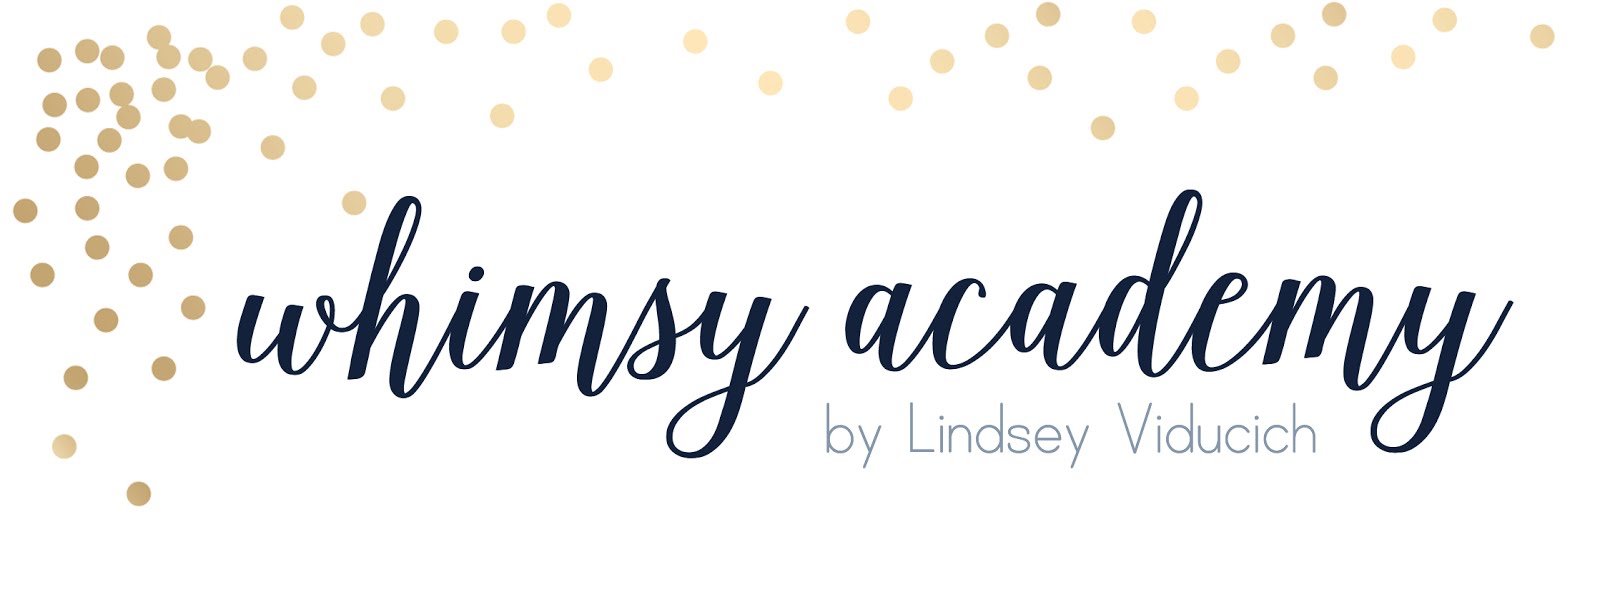 Whimsy Academy